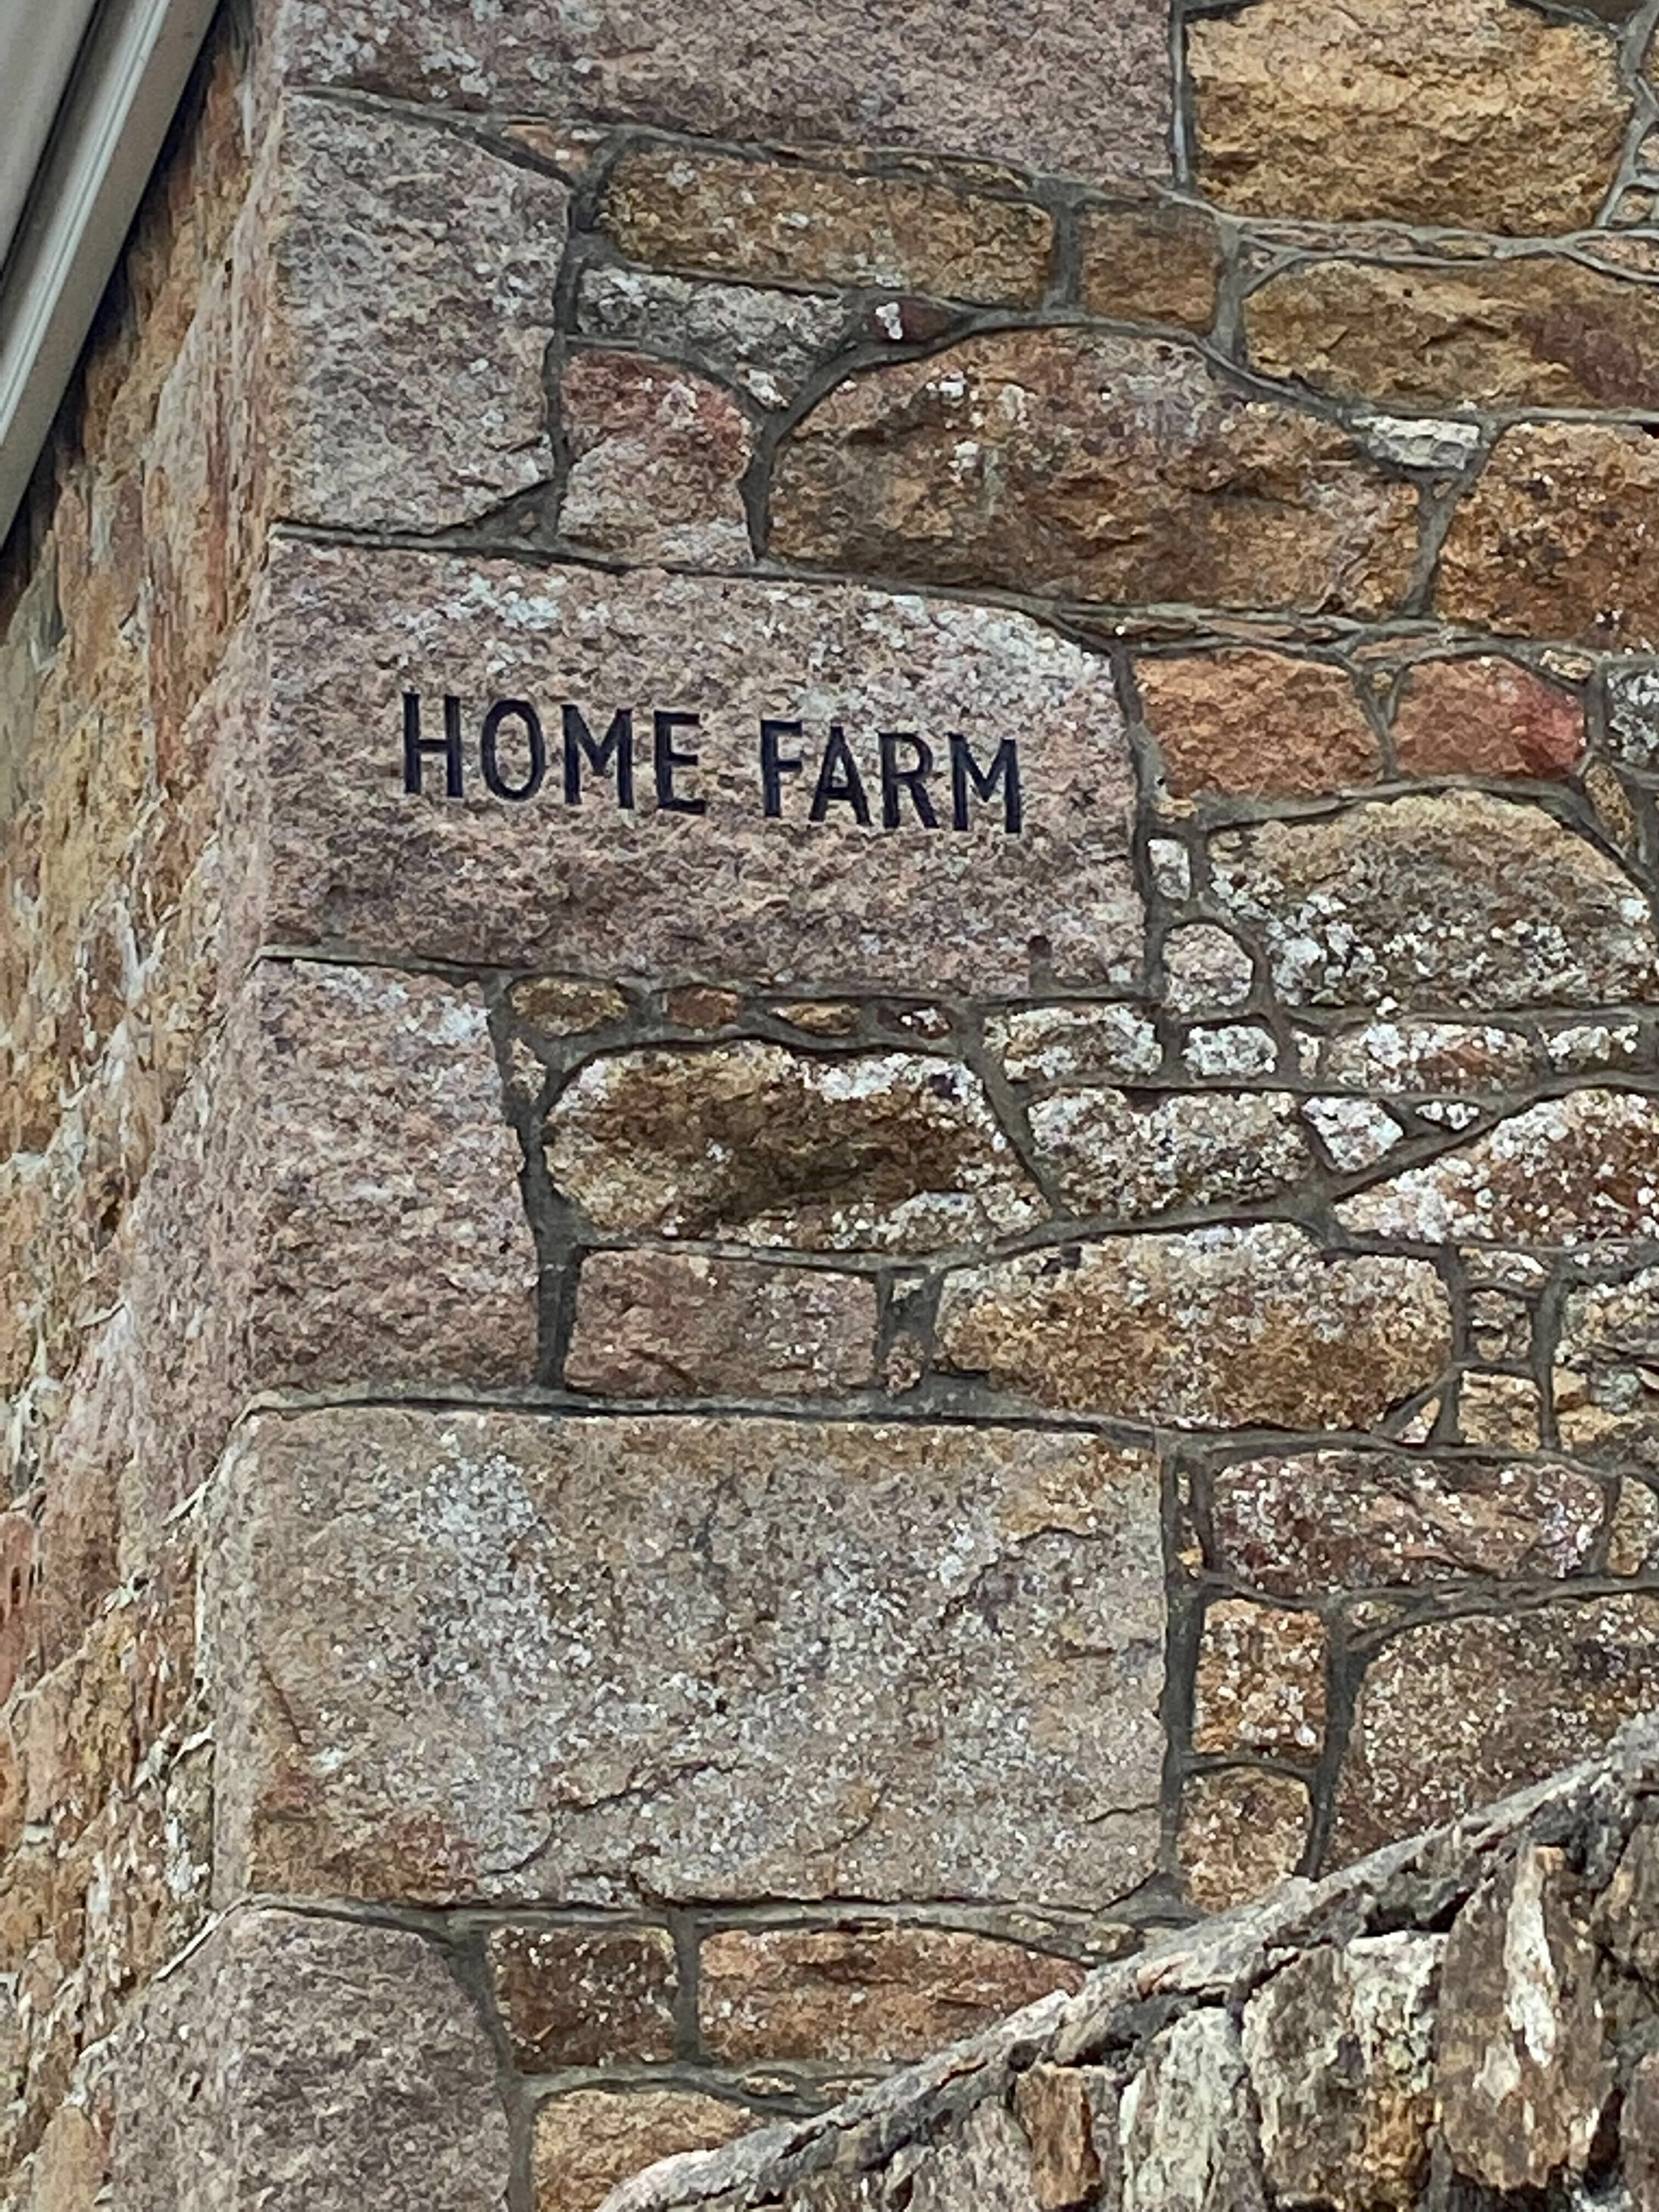 Home Farm St Peter.jpeg